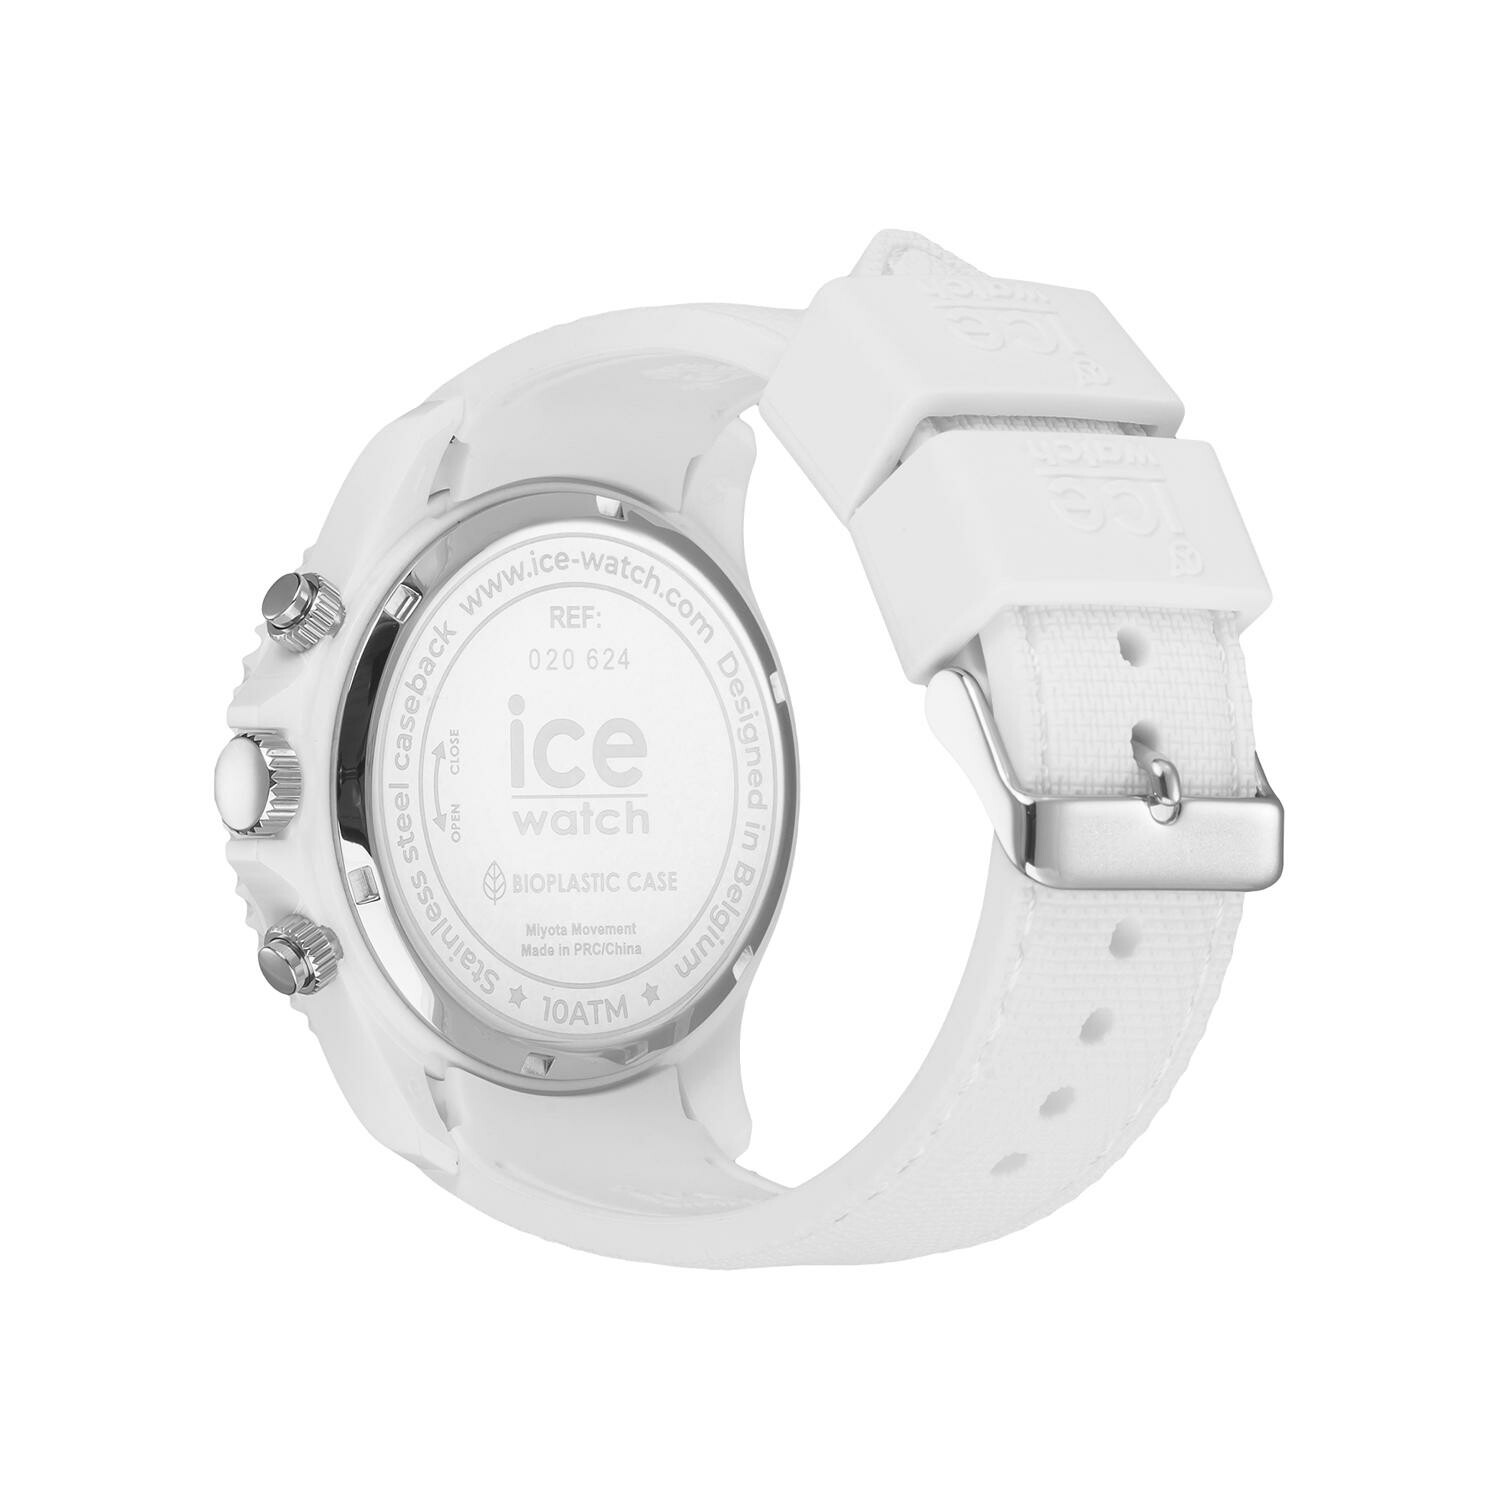 Achat Montre Ice-Watch ICE 020624 chrono White blue